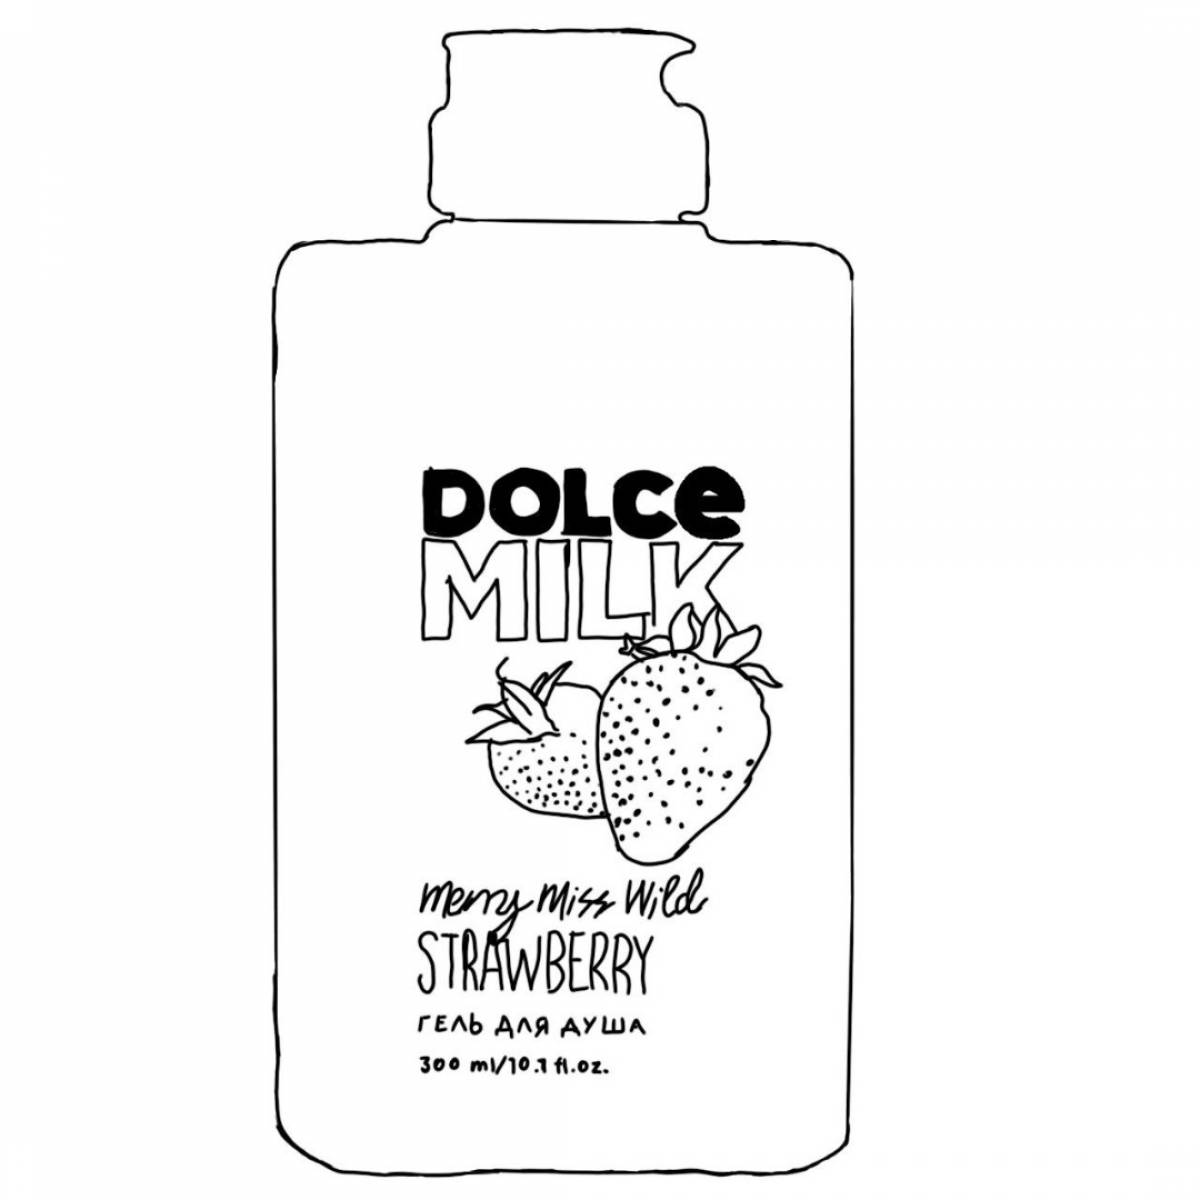 Dolce milk black white #13